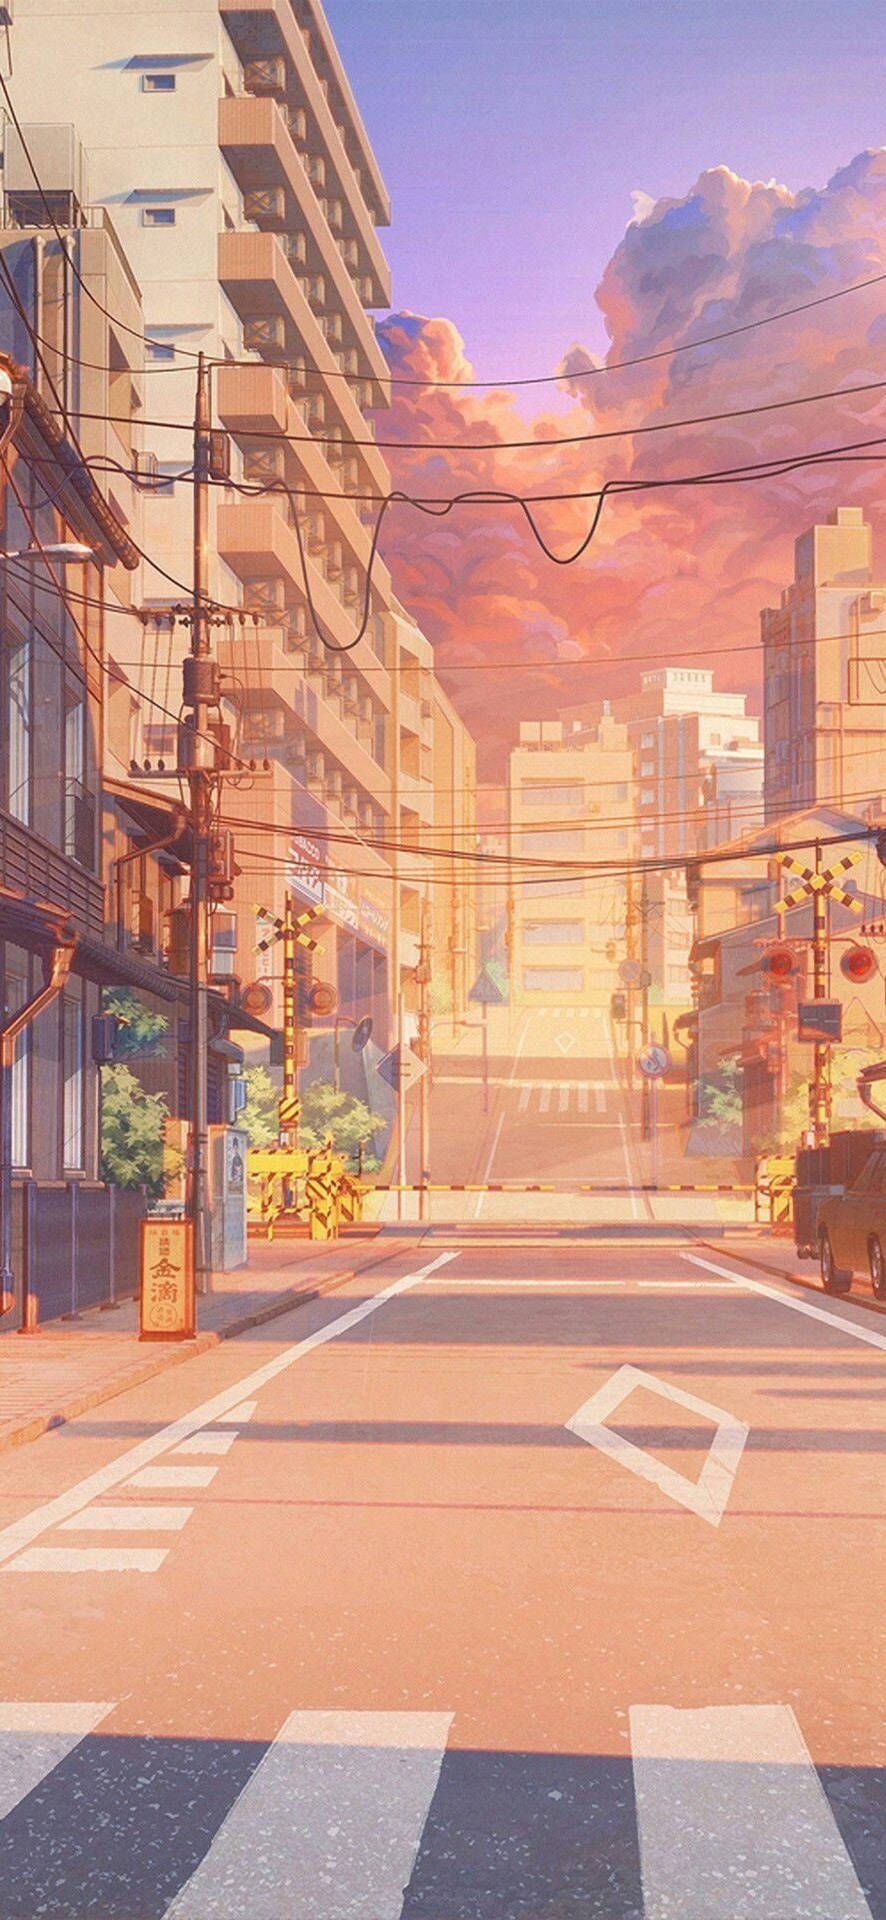 Download Japanese Aesthetic iPhone Soft Pastel Street Wallpaper